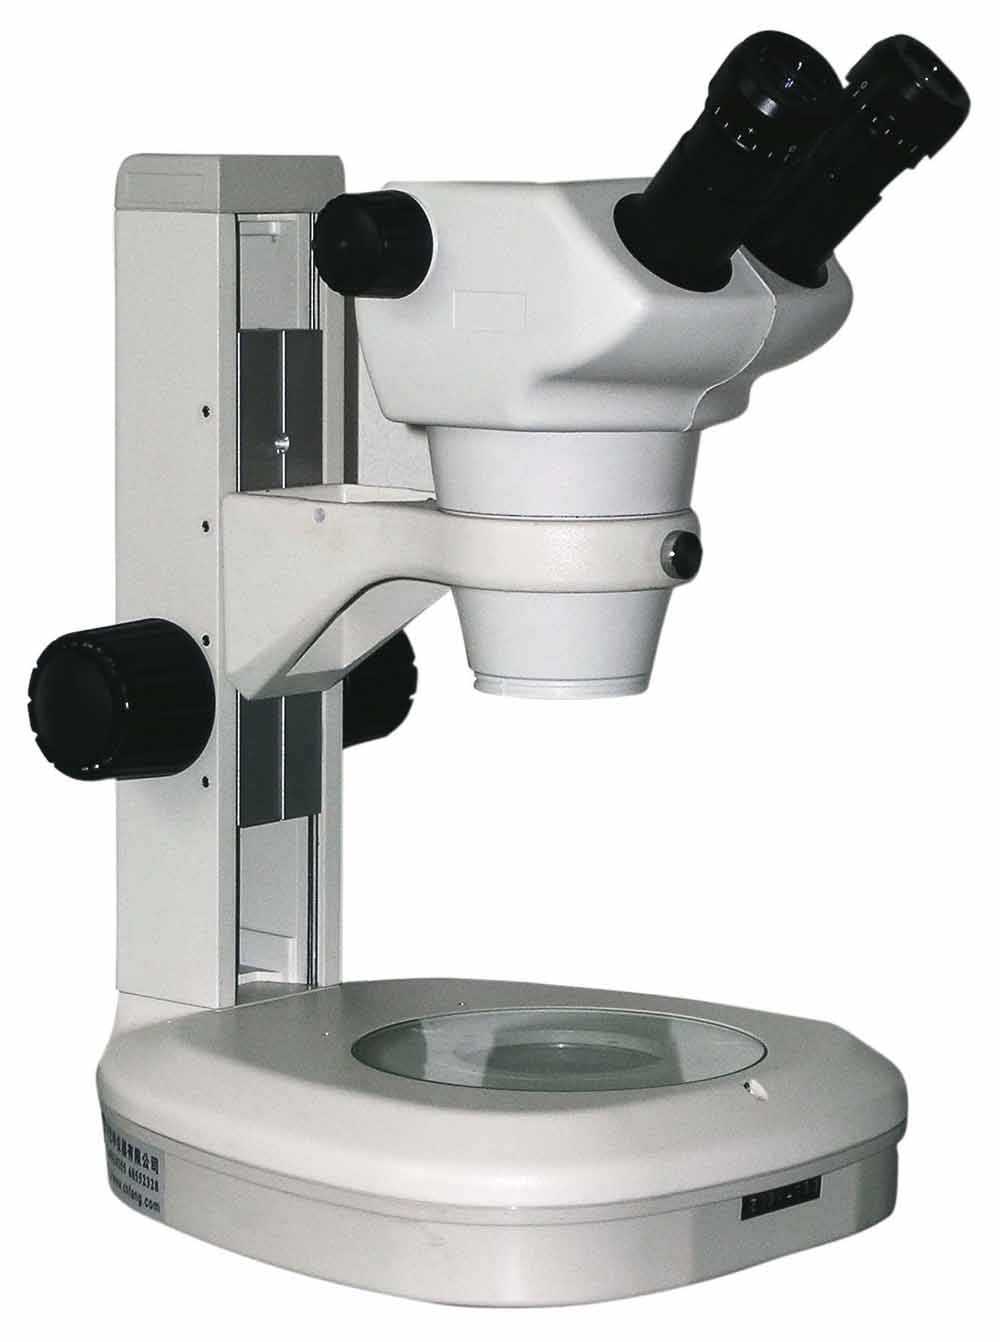 ZOOM-646系列透射型立体显微镜